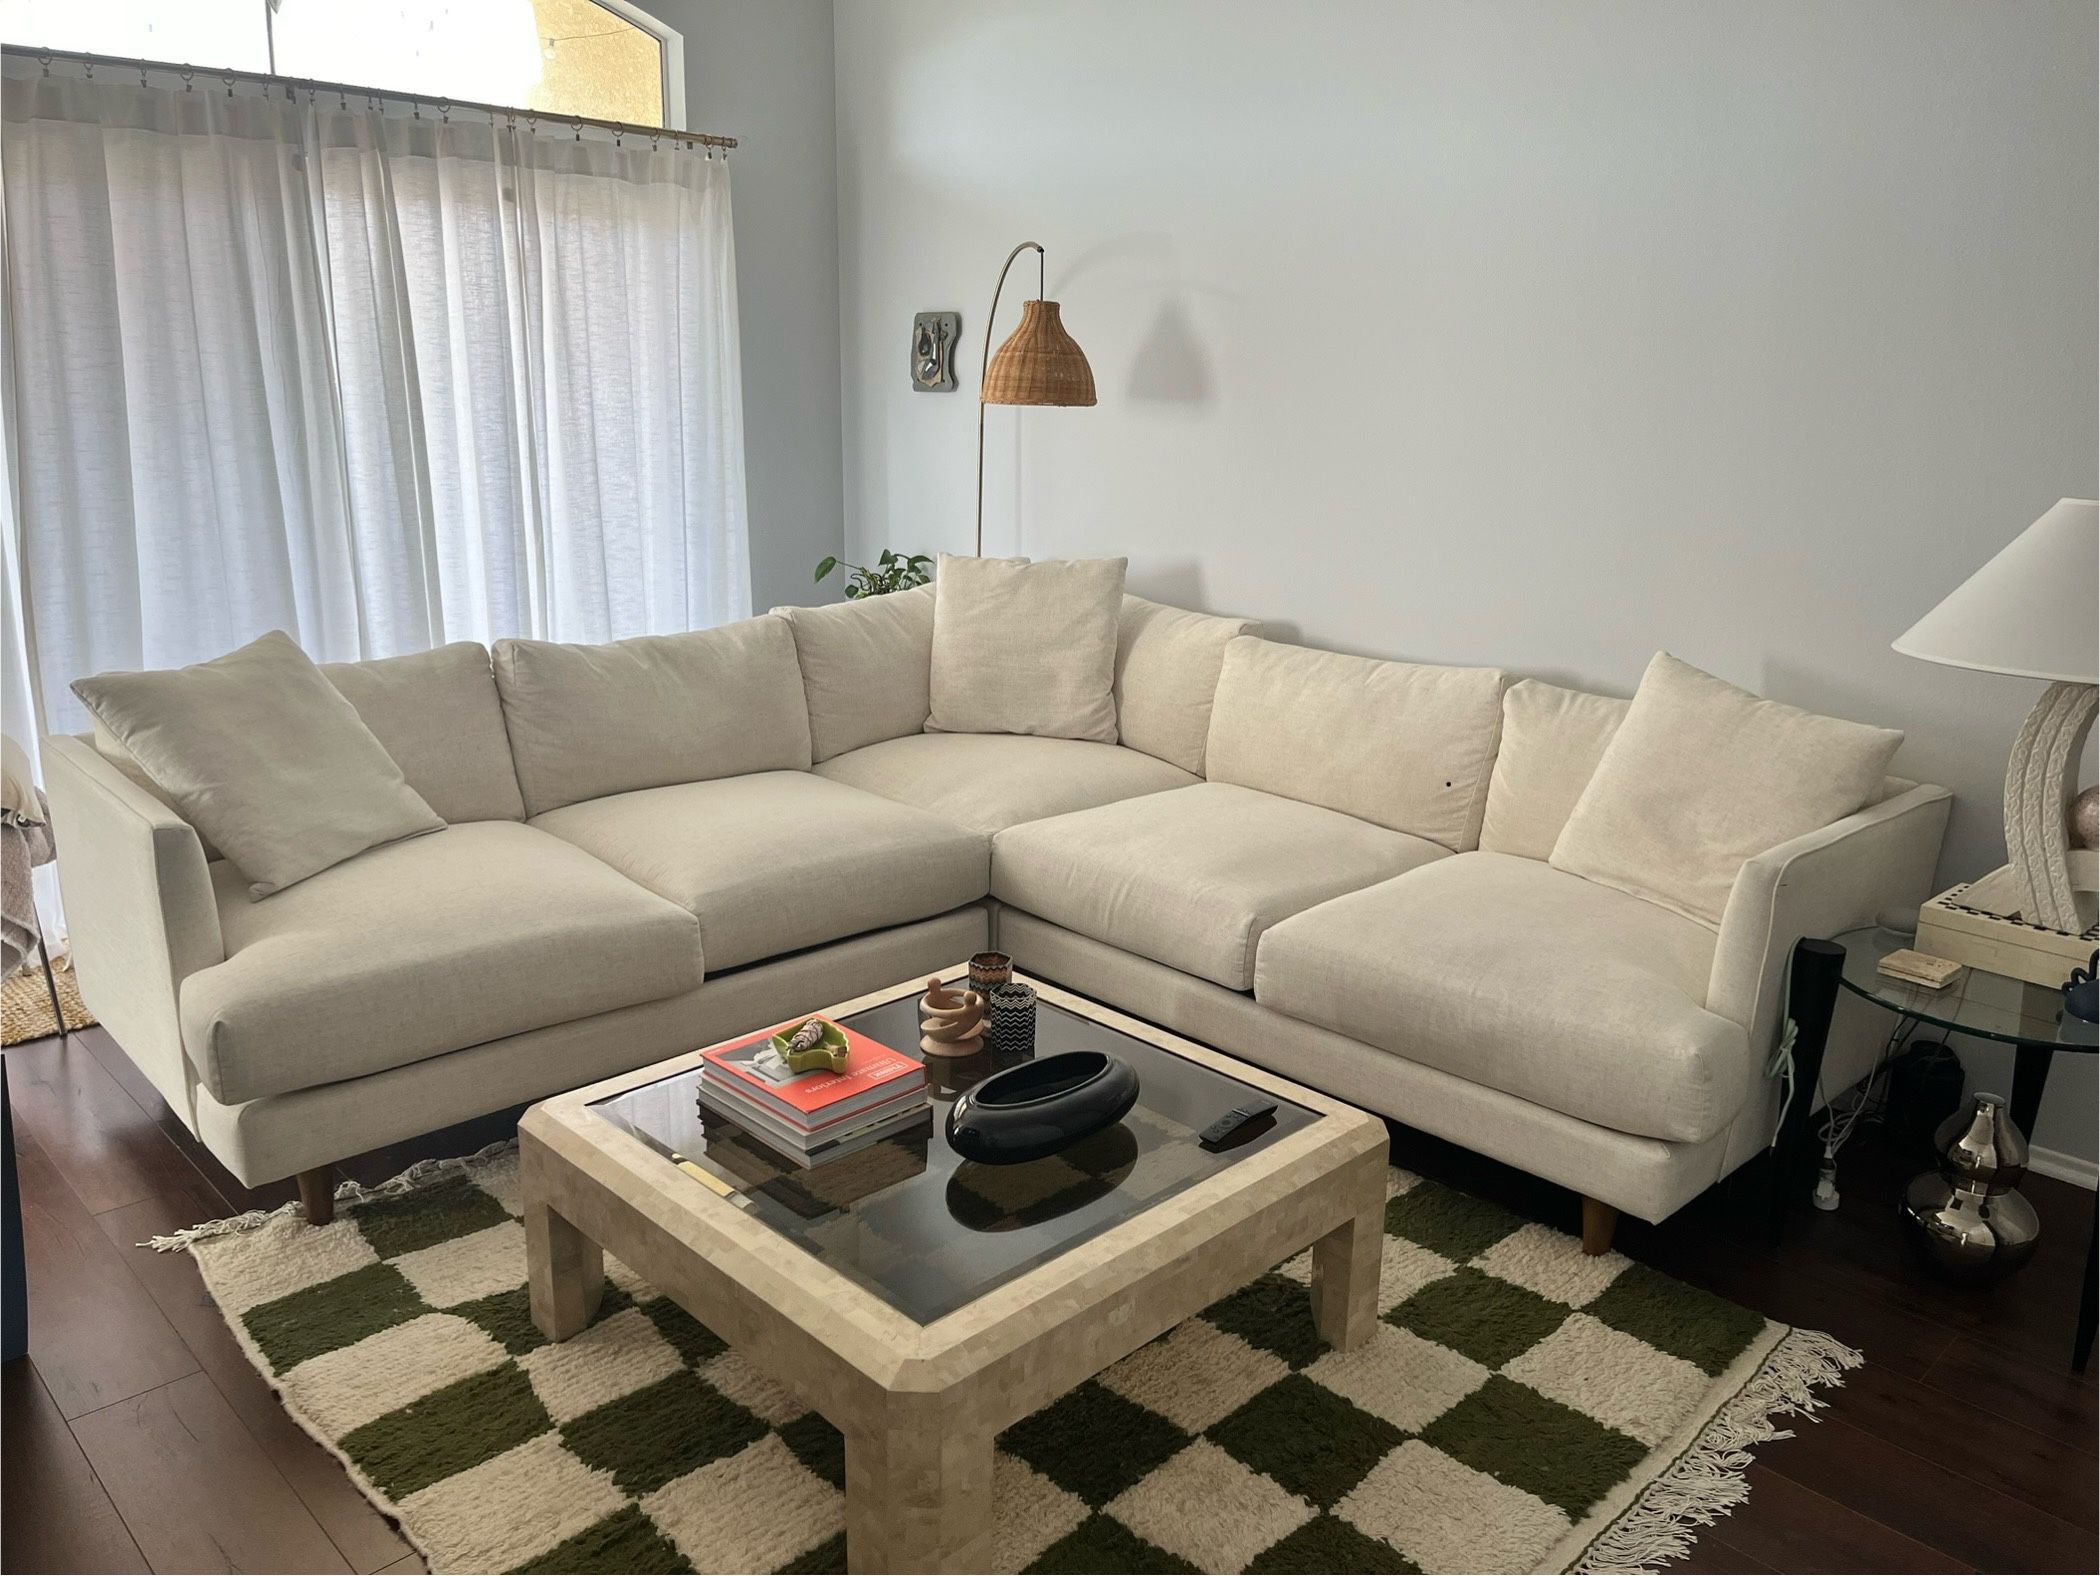 Off-White/Cream Sectional Sofa